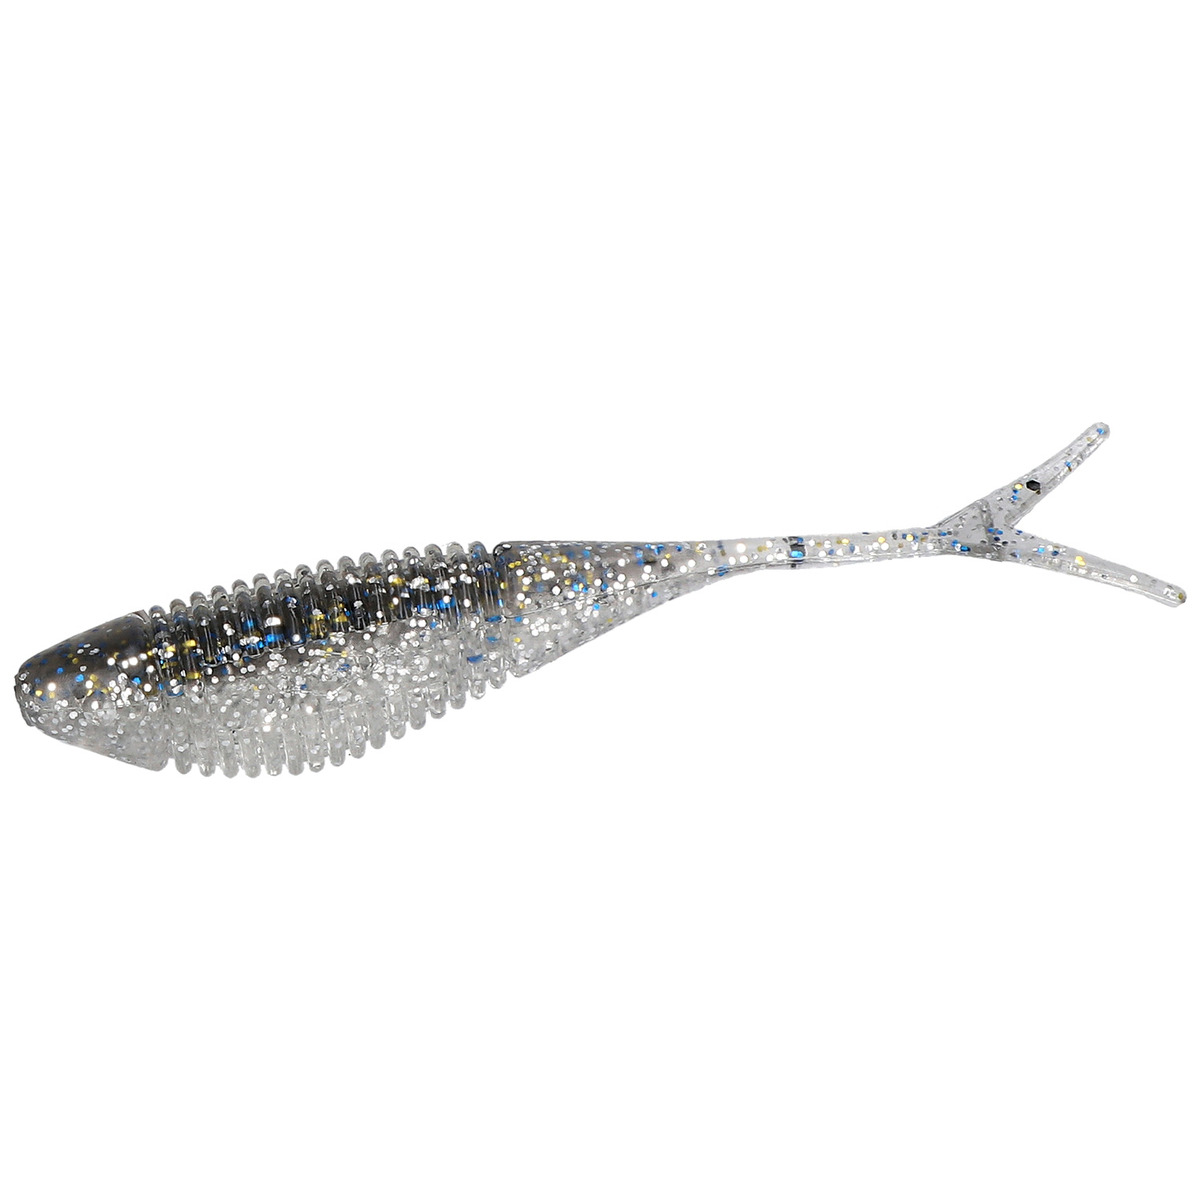 Mikado Fish Fry - 10.5 cm / 564